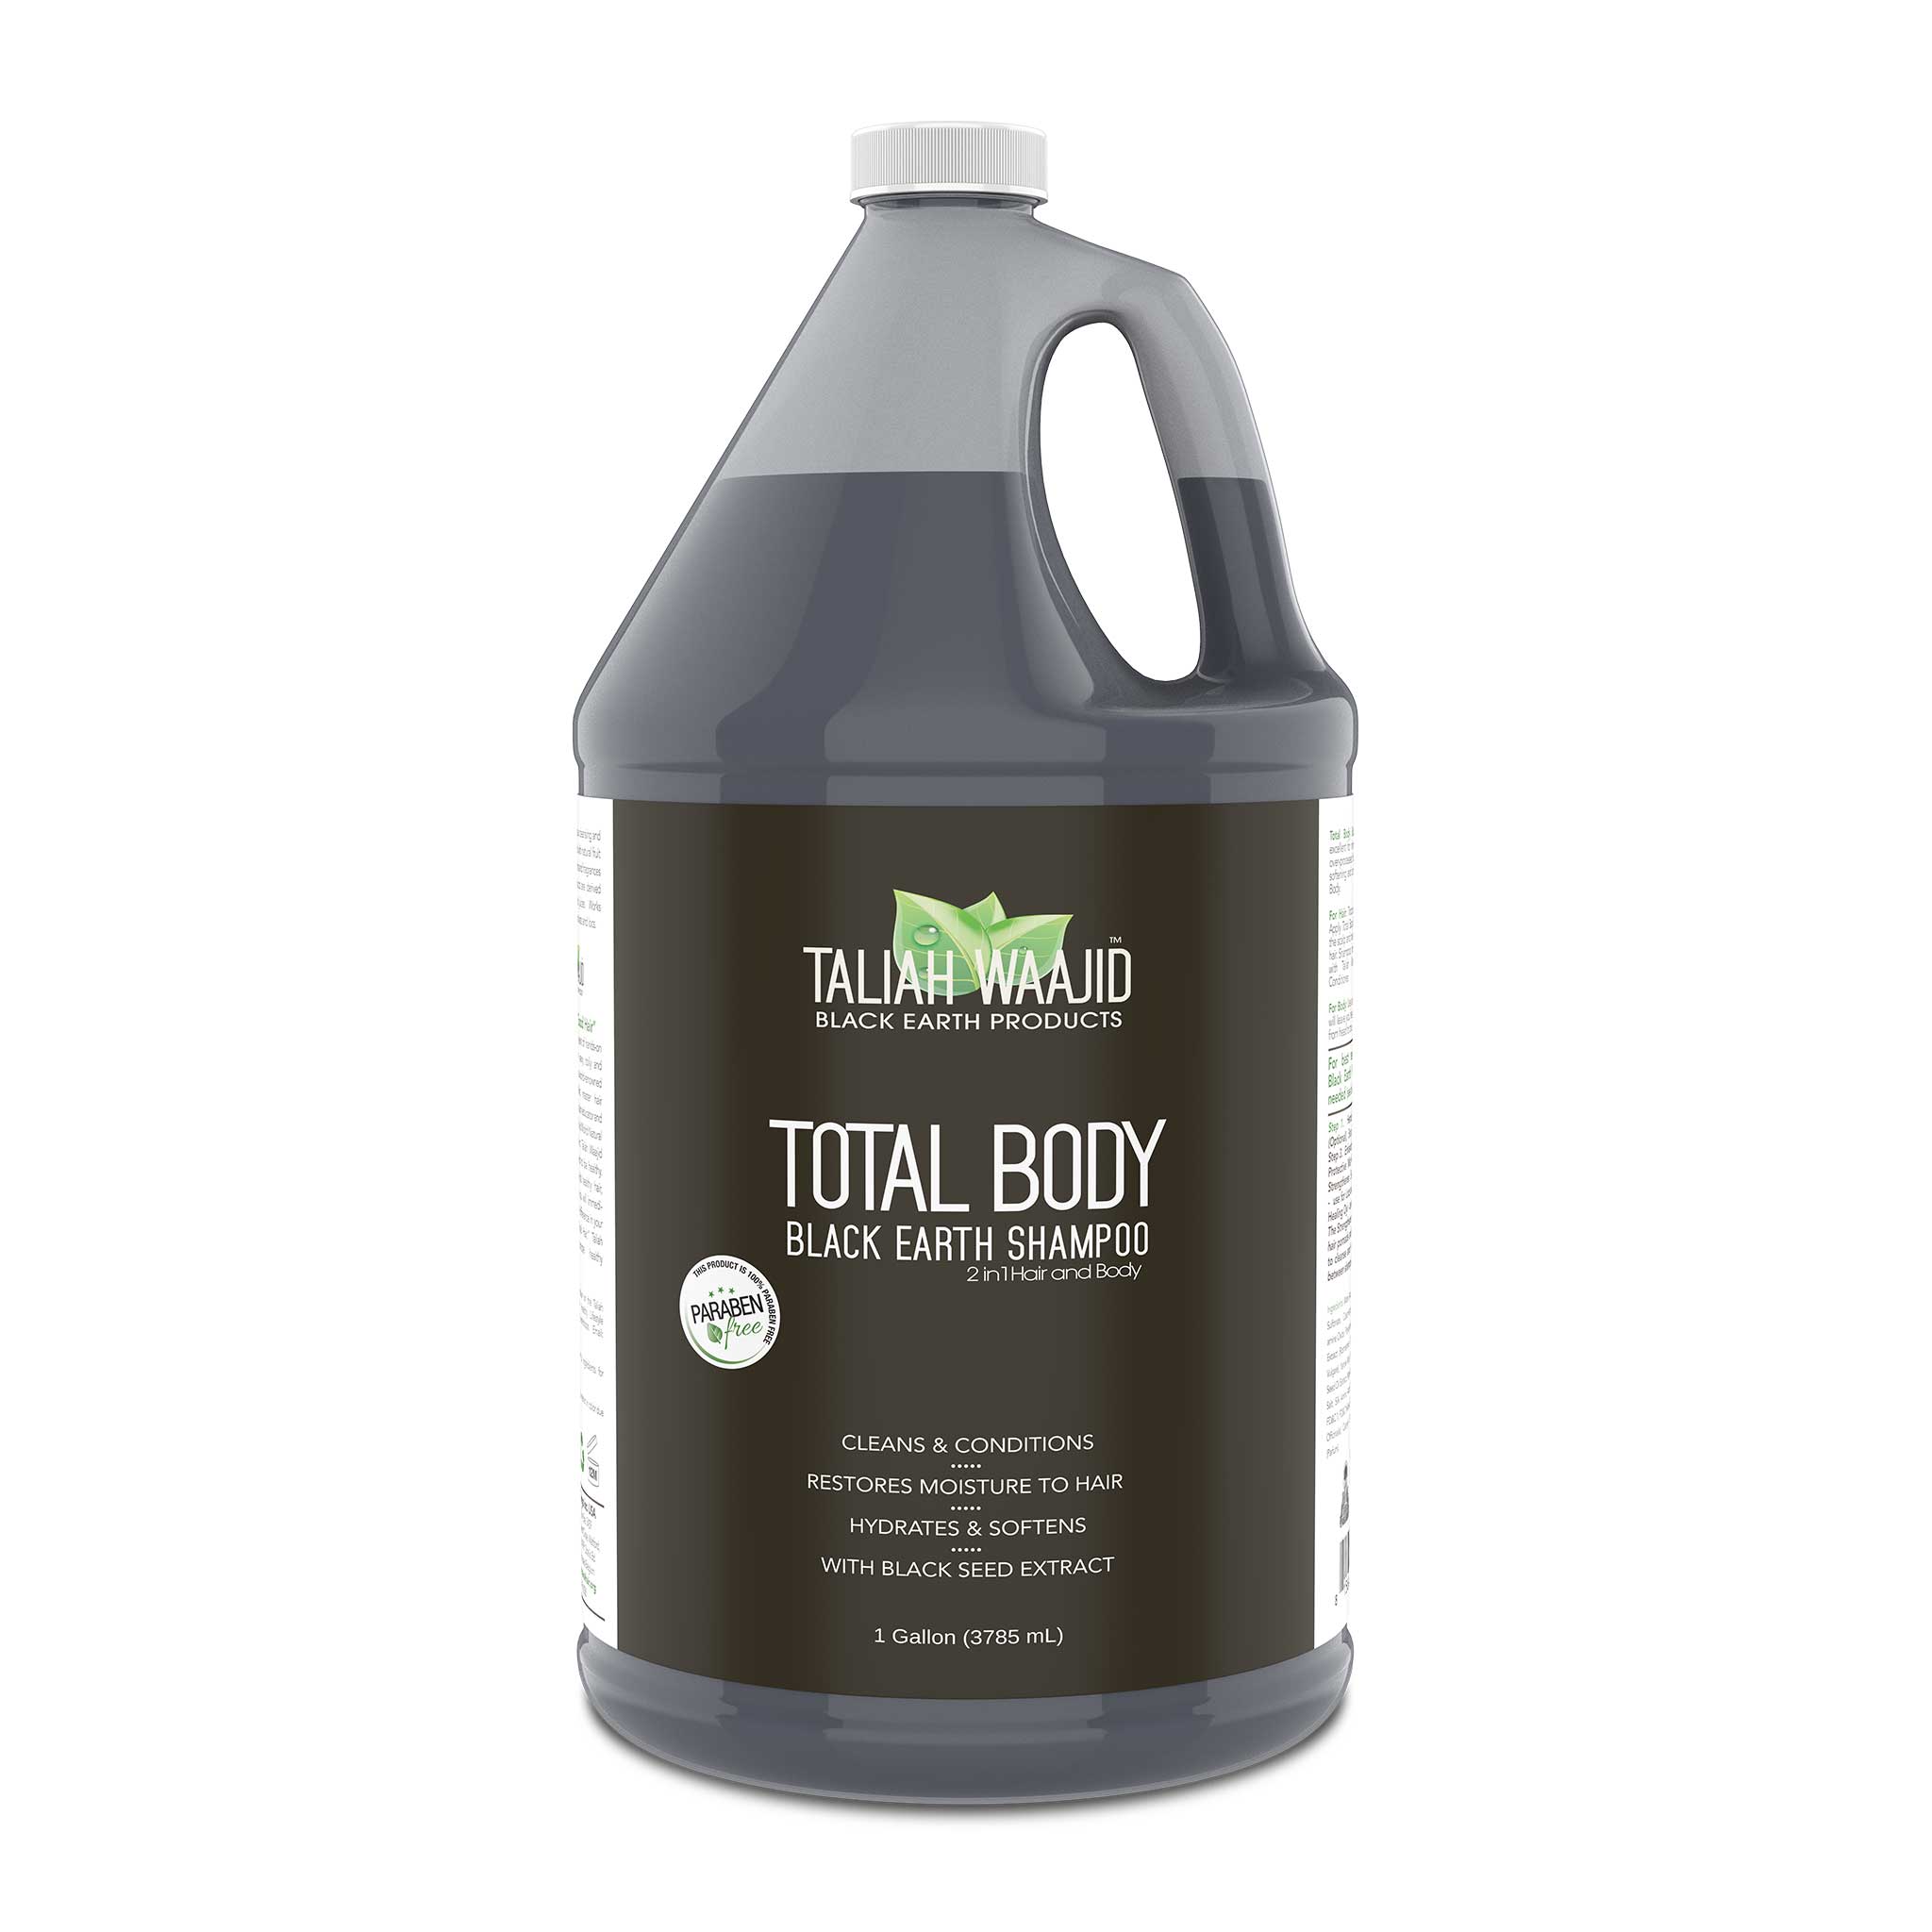 Black Earth Products Total Body Black Earth Shampoo Gallon